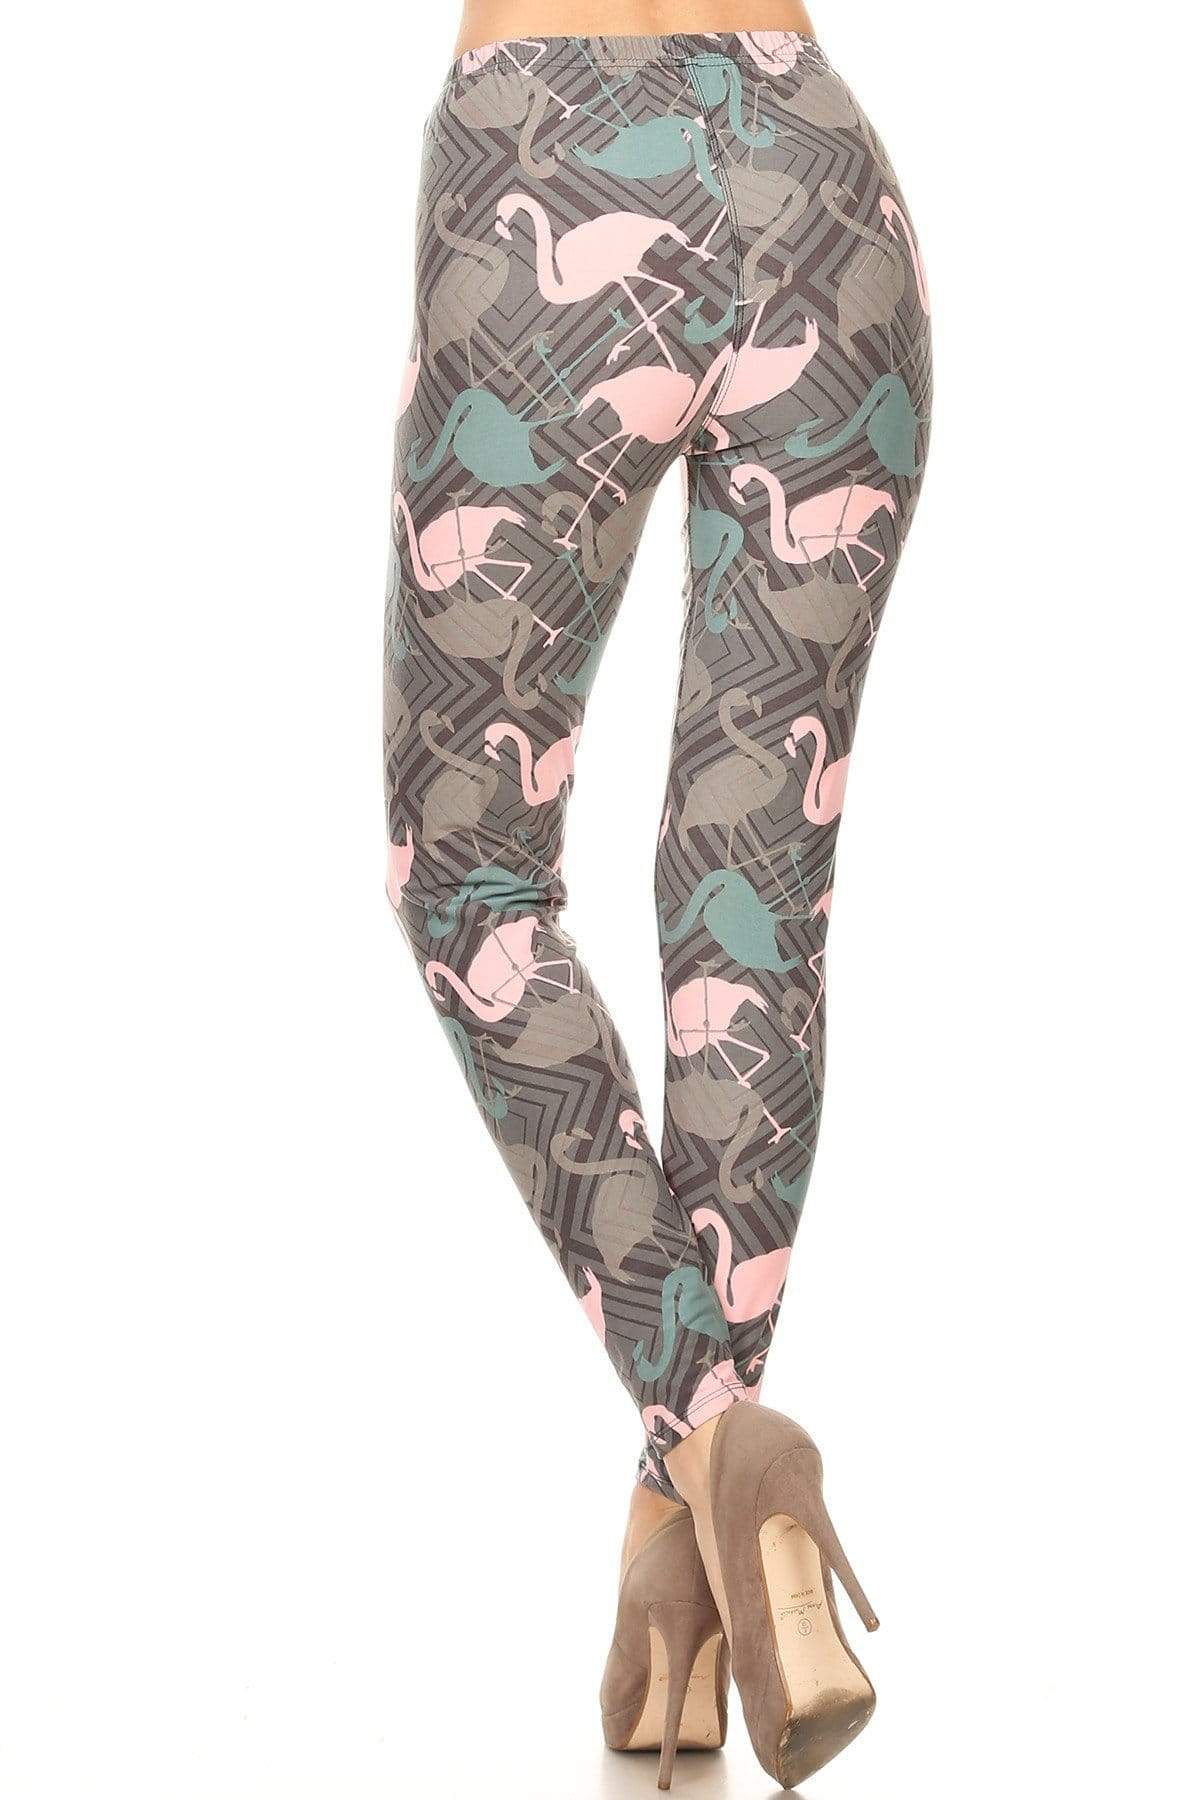 OxLaLa Leggings Pink Flamingos Pink Flamingos - Soft, comfortable leggings. Beautiful designs and patterns. 